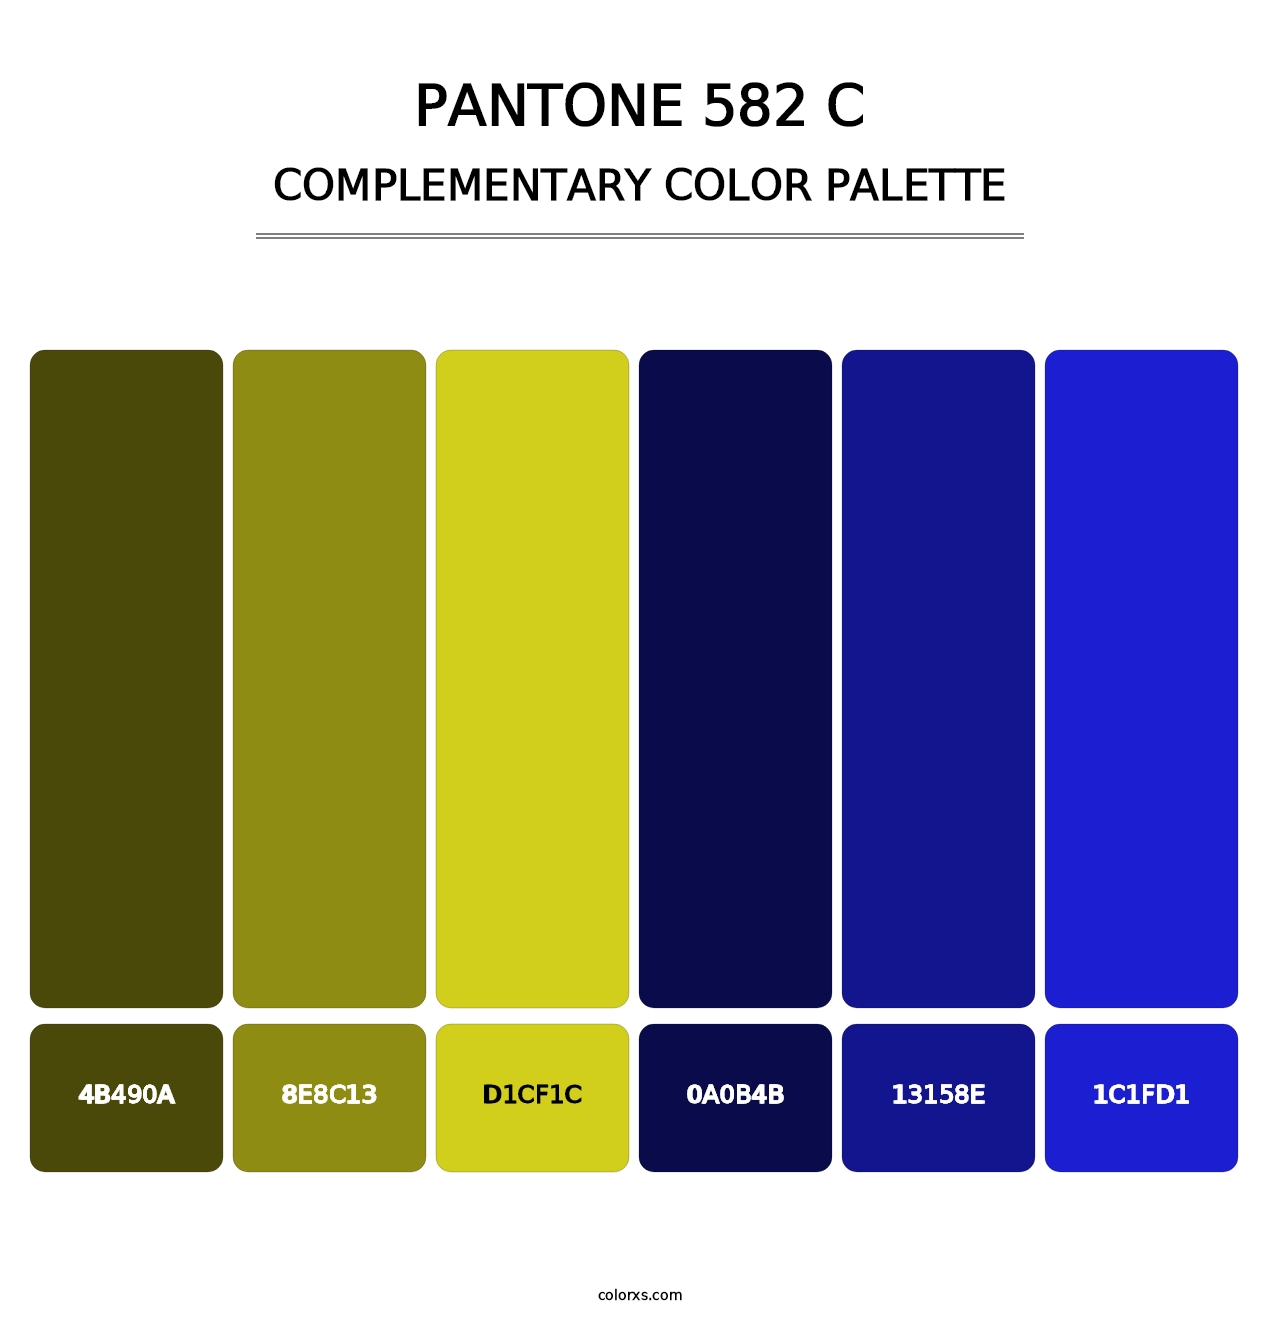 PANTONE 582 C - Complementary Color Palette